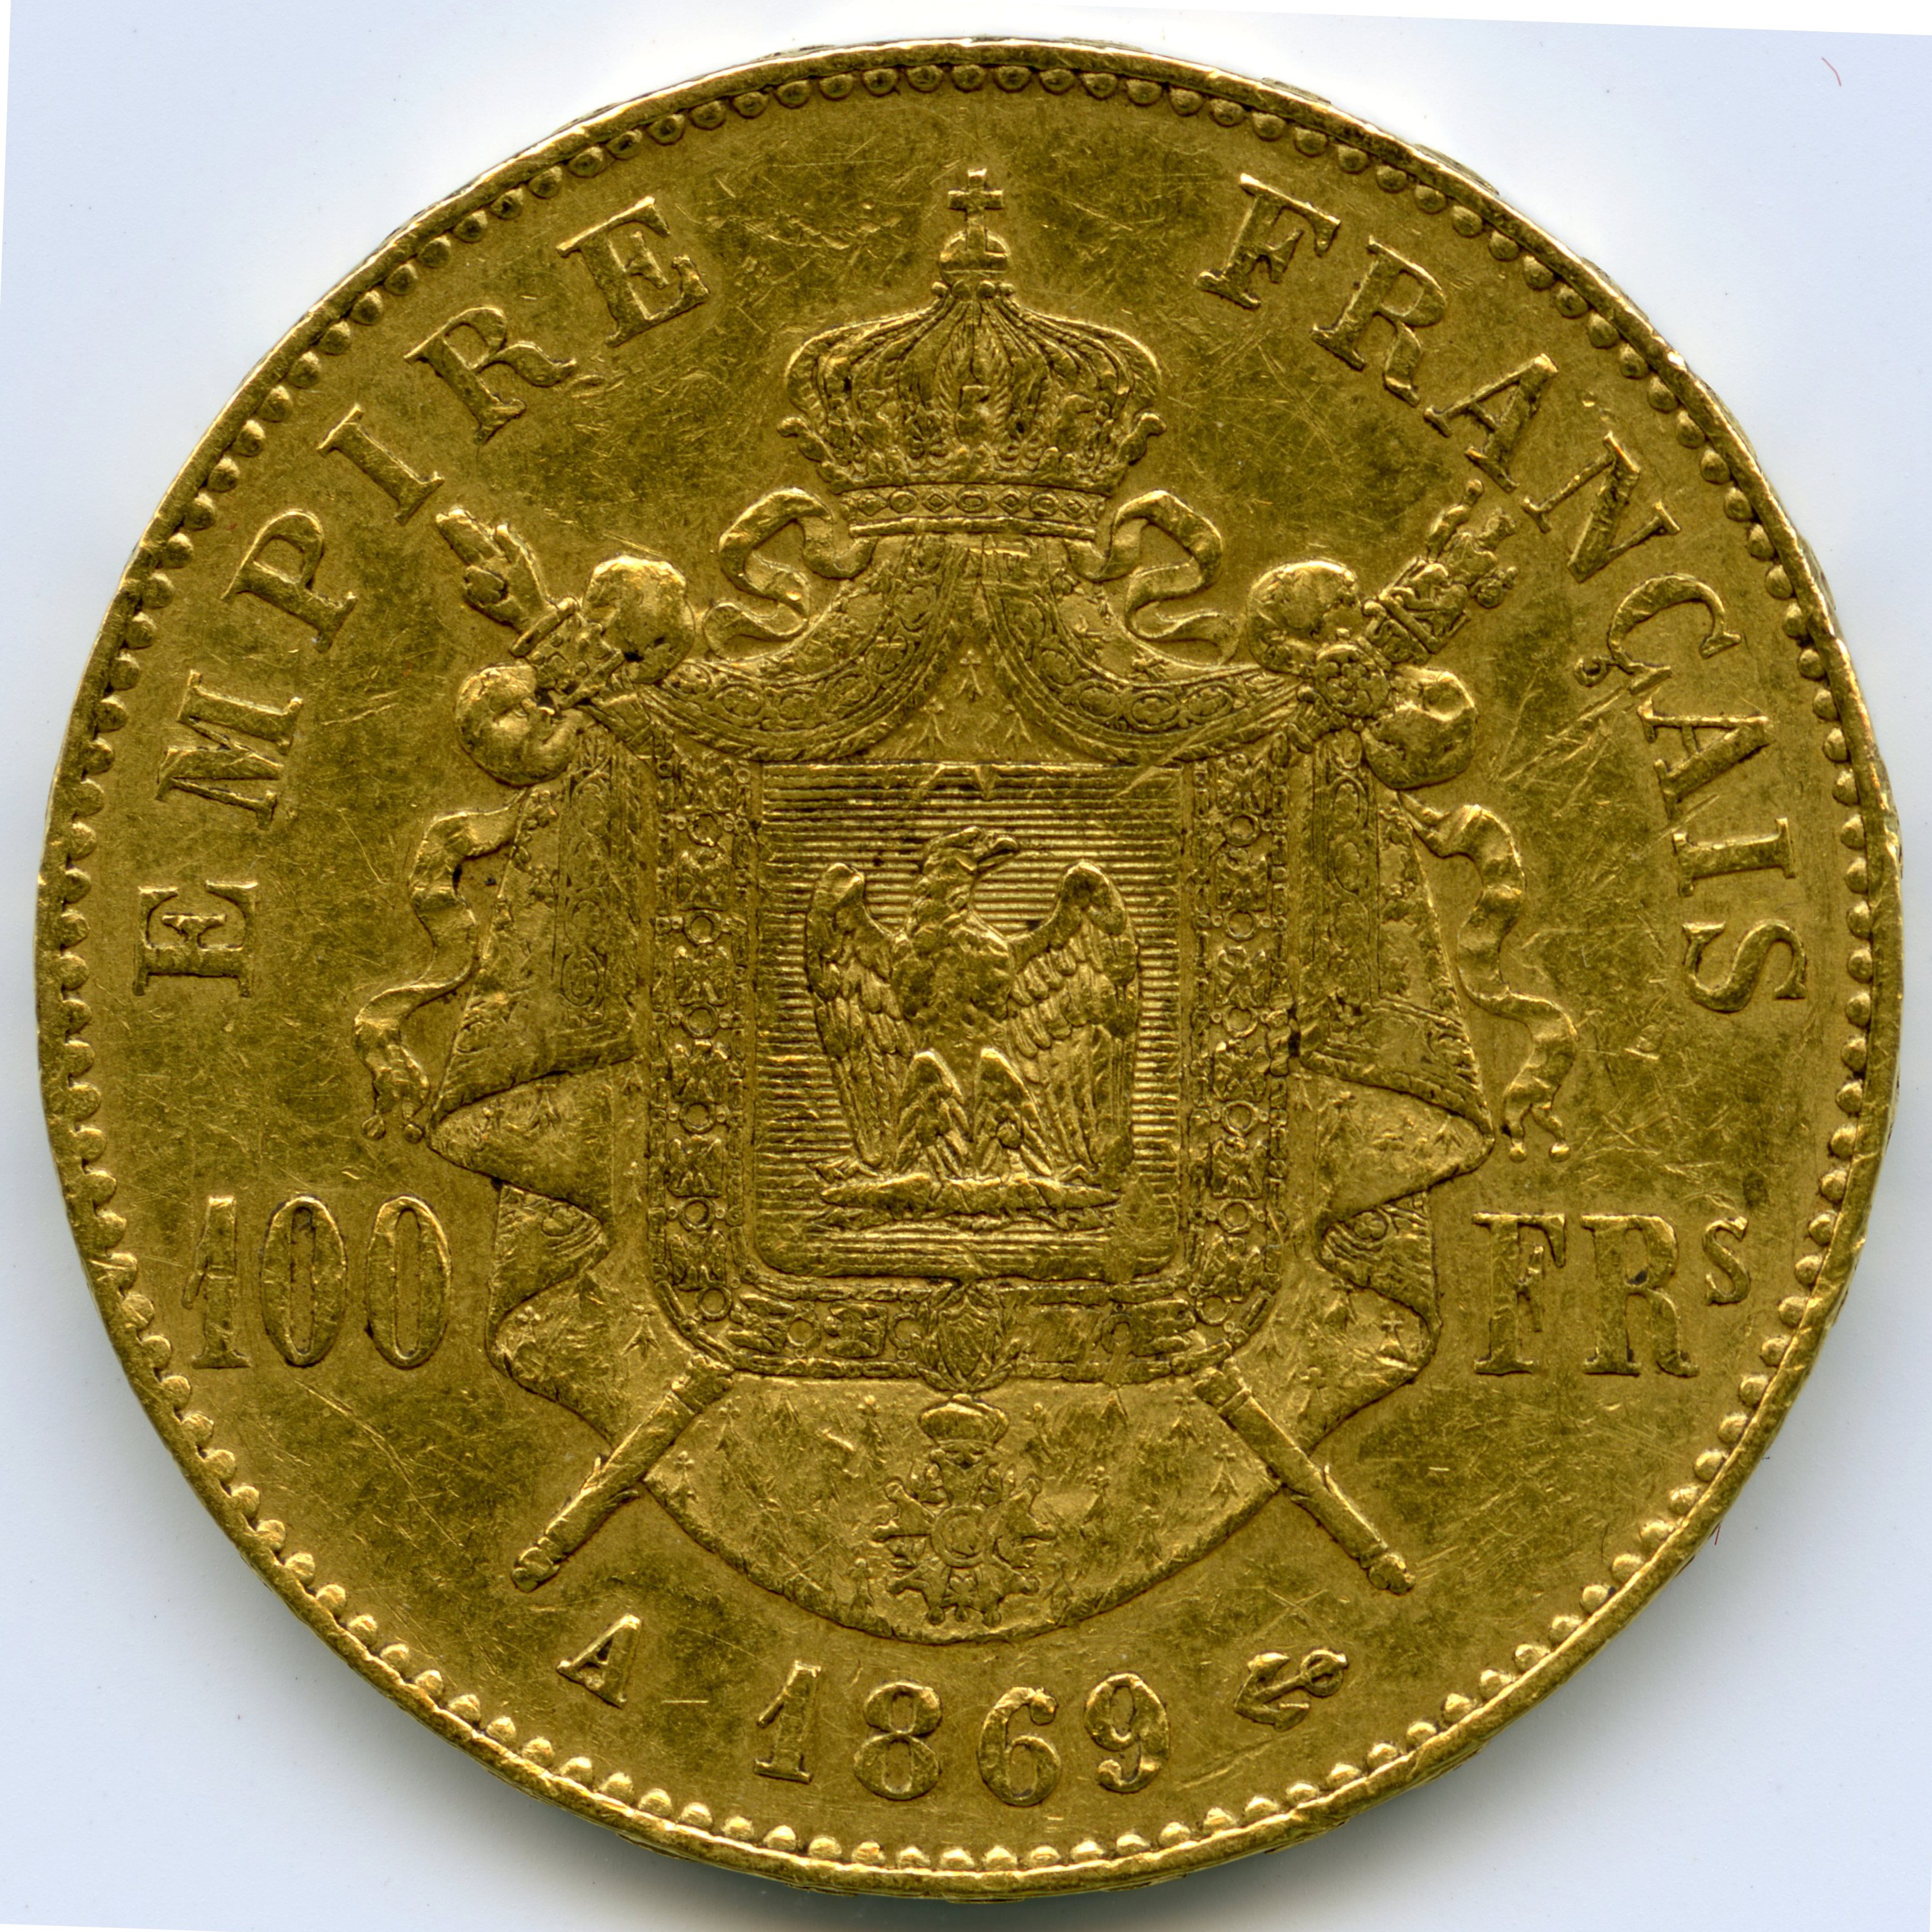 100 Francs - Napoléon III - 1869 - Paris revers